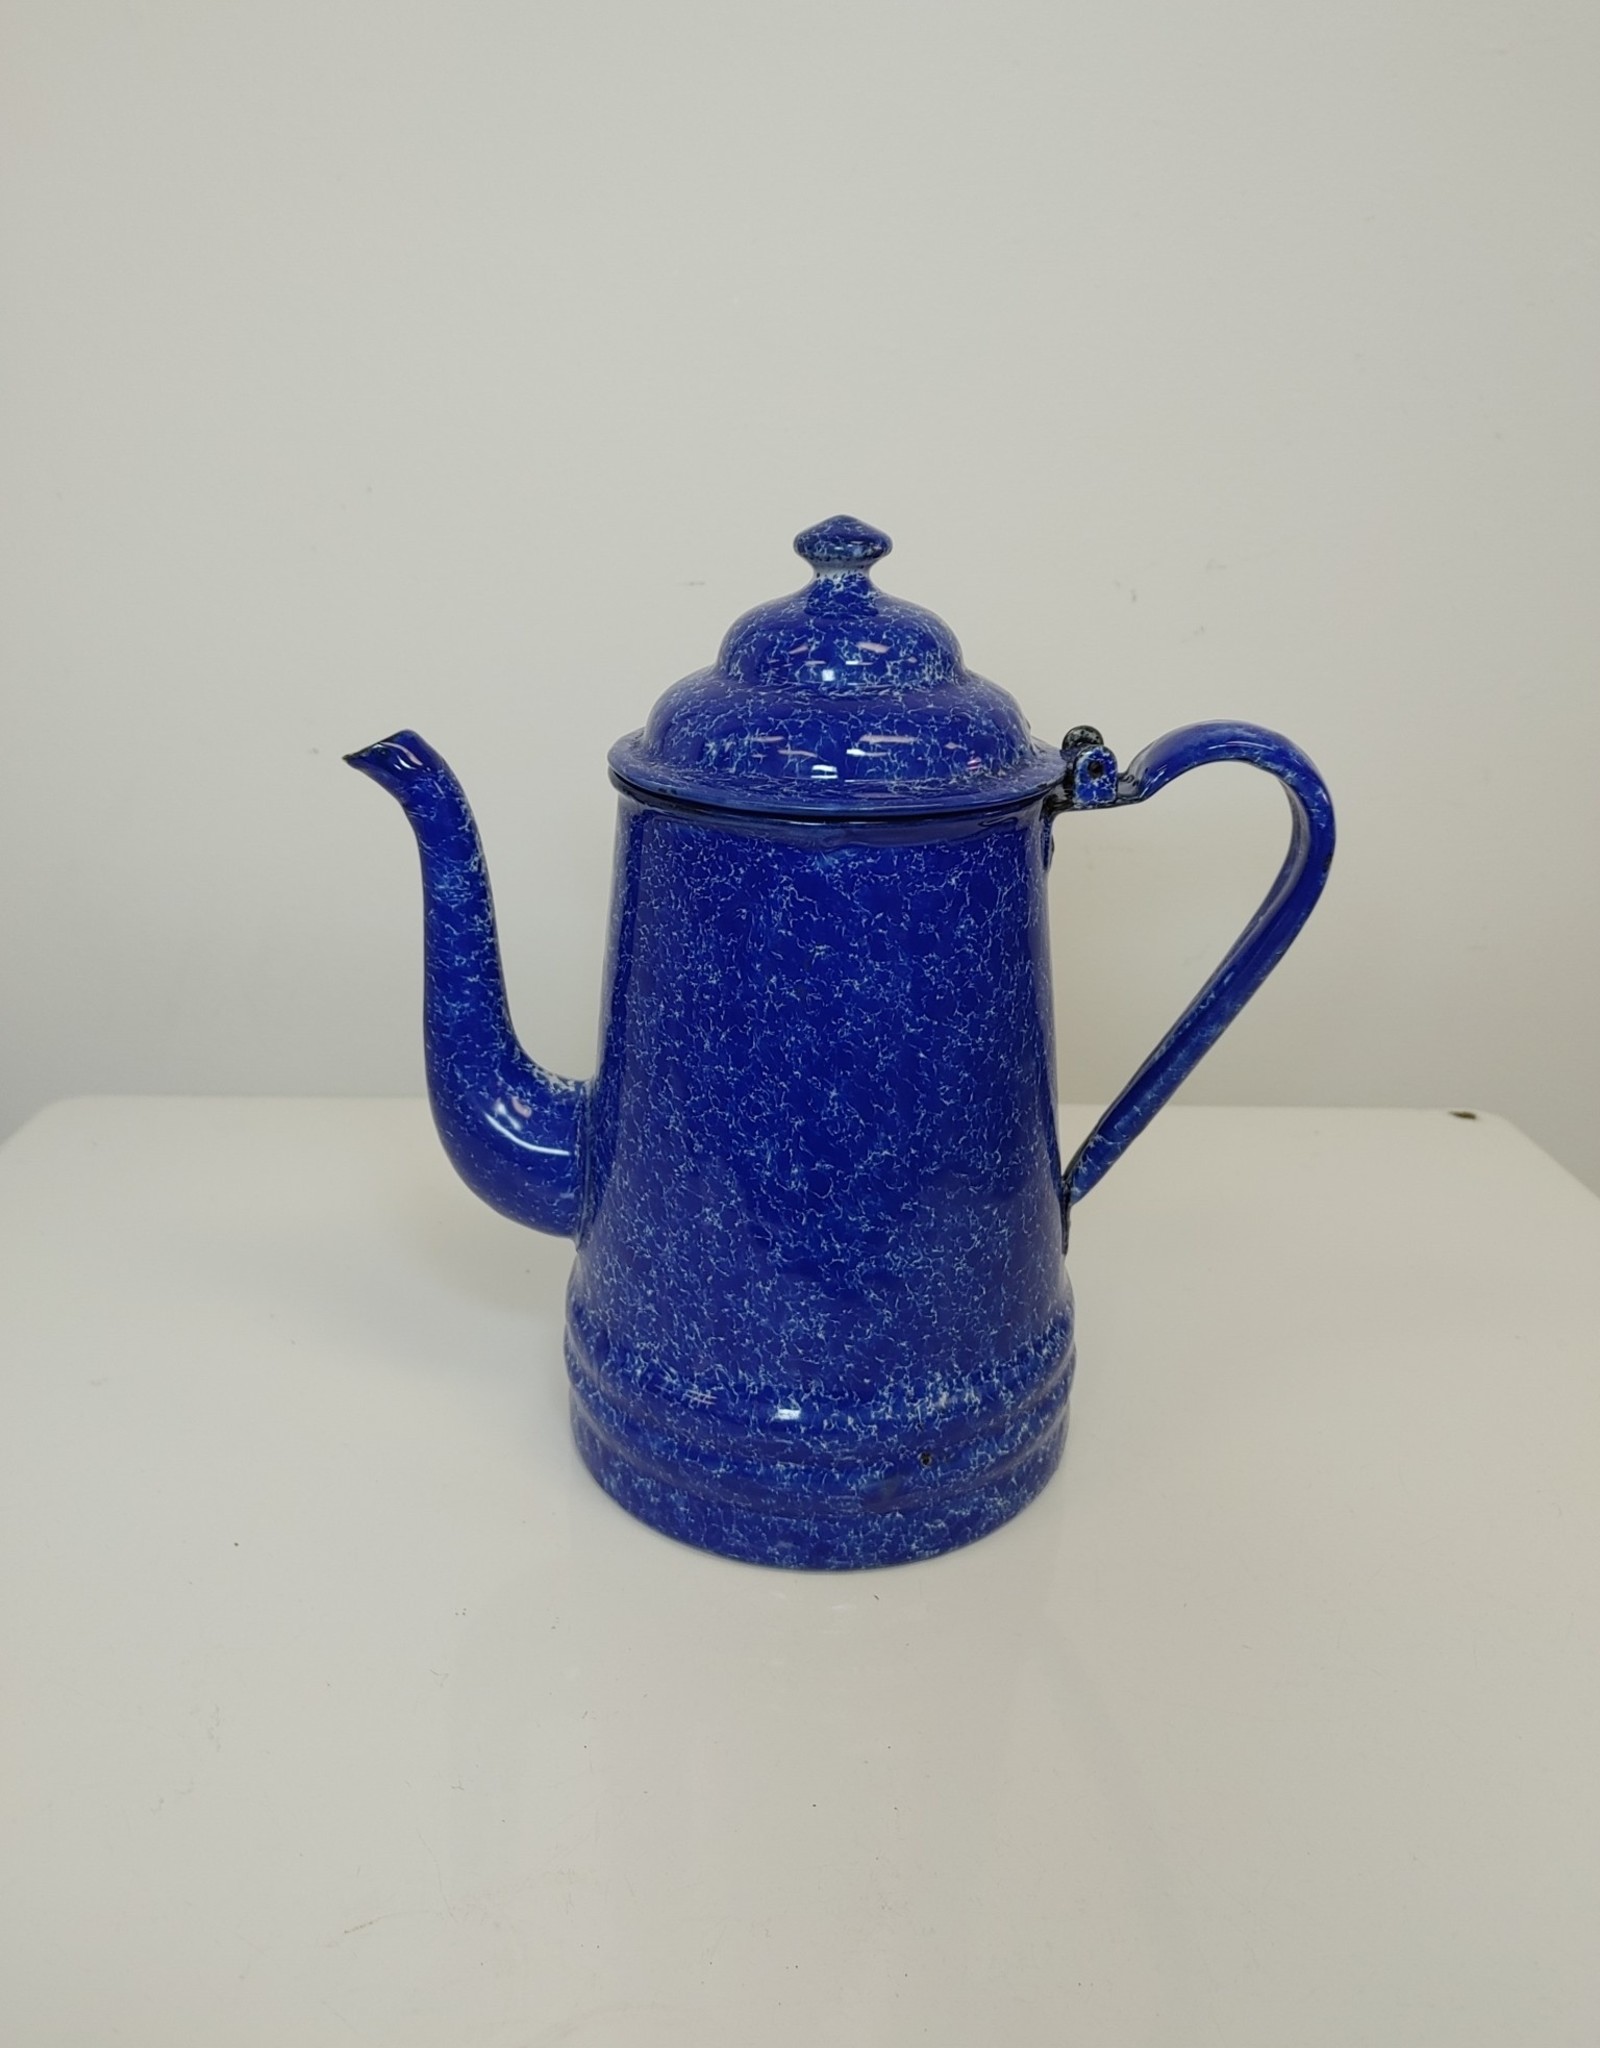 Vintage Blue Enamel Coffee Pot - 9.5"